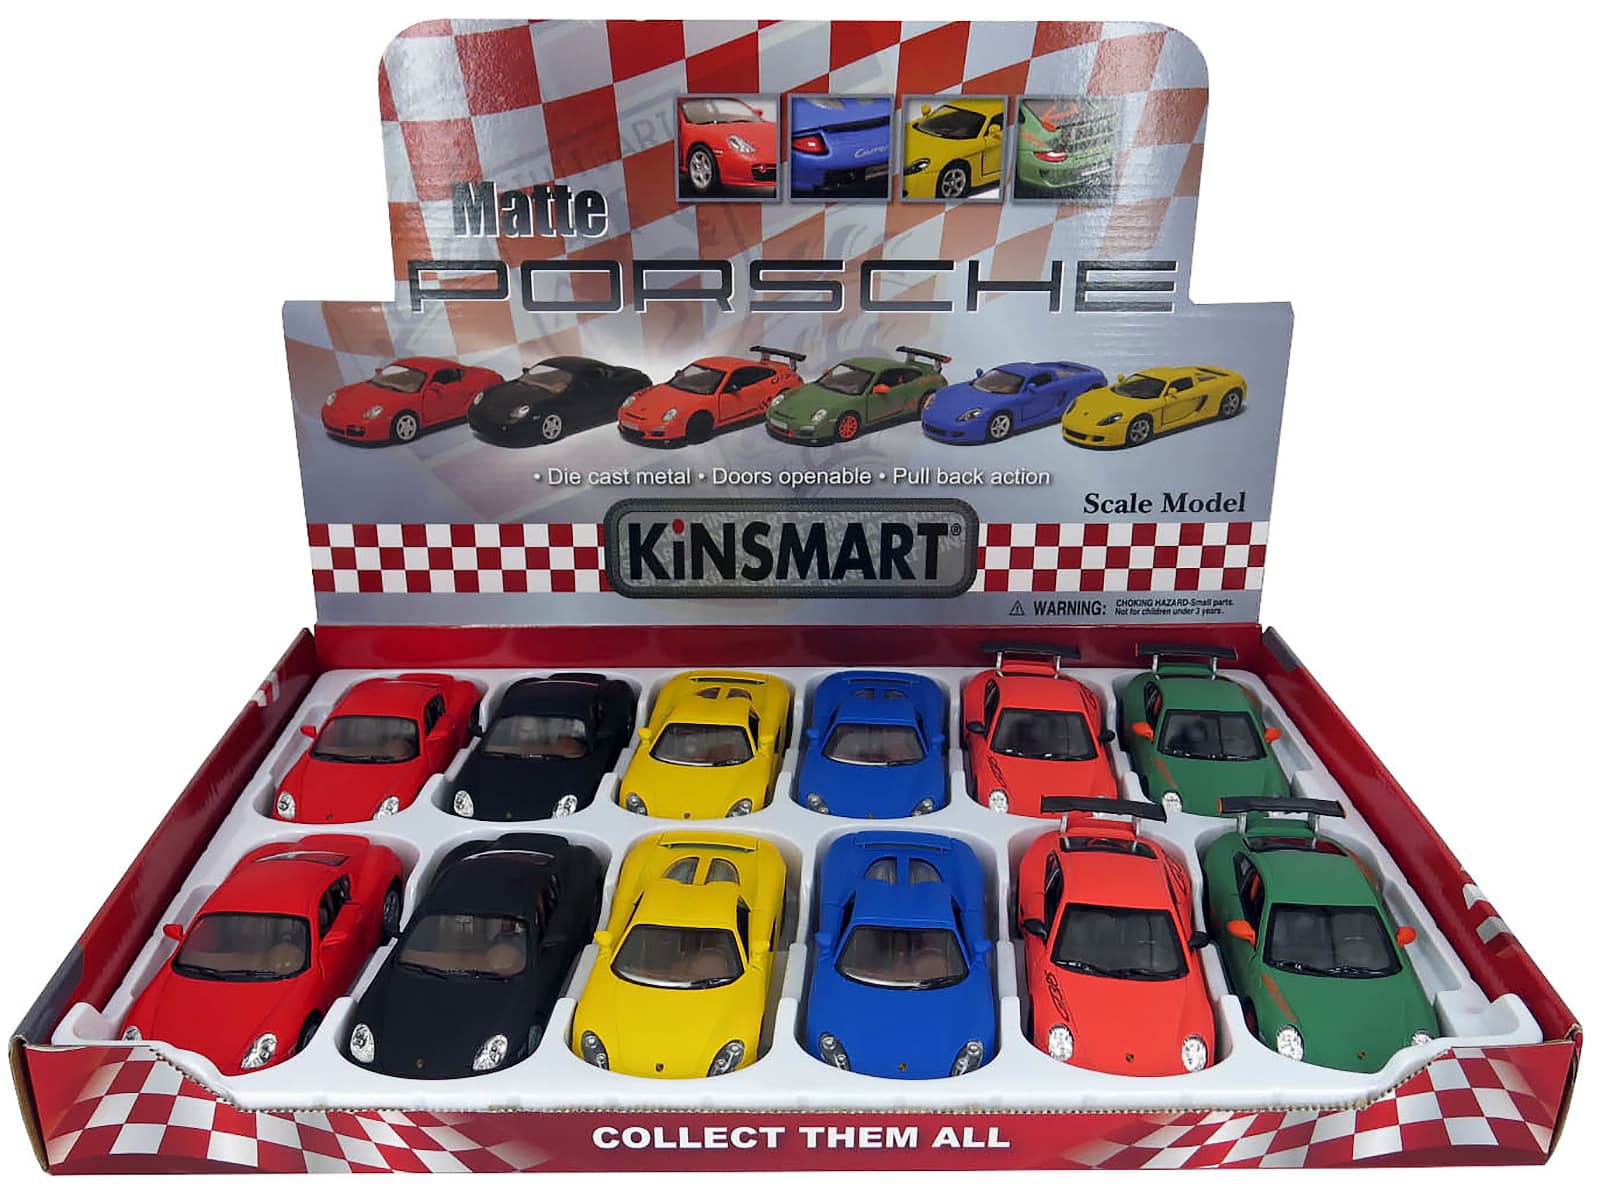 Металлическая машинка Kinsmart 1:36 «Matte Porsche» KT5071D, инерционная / Микс